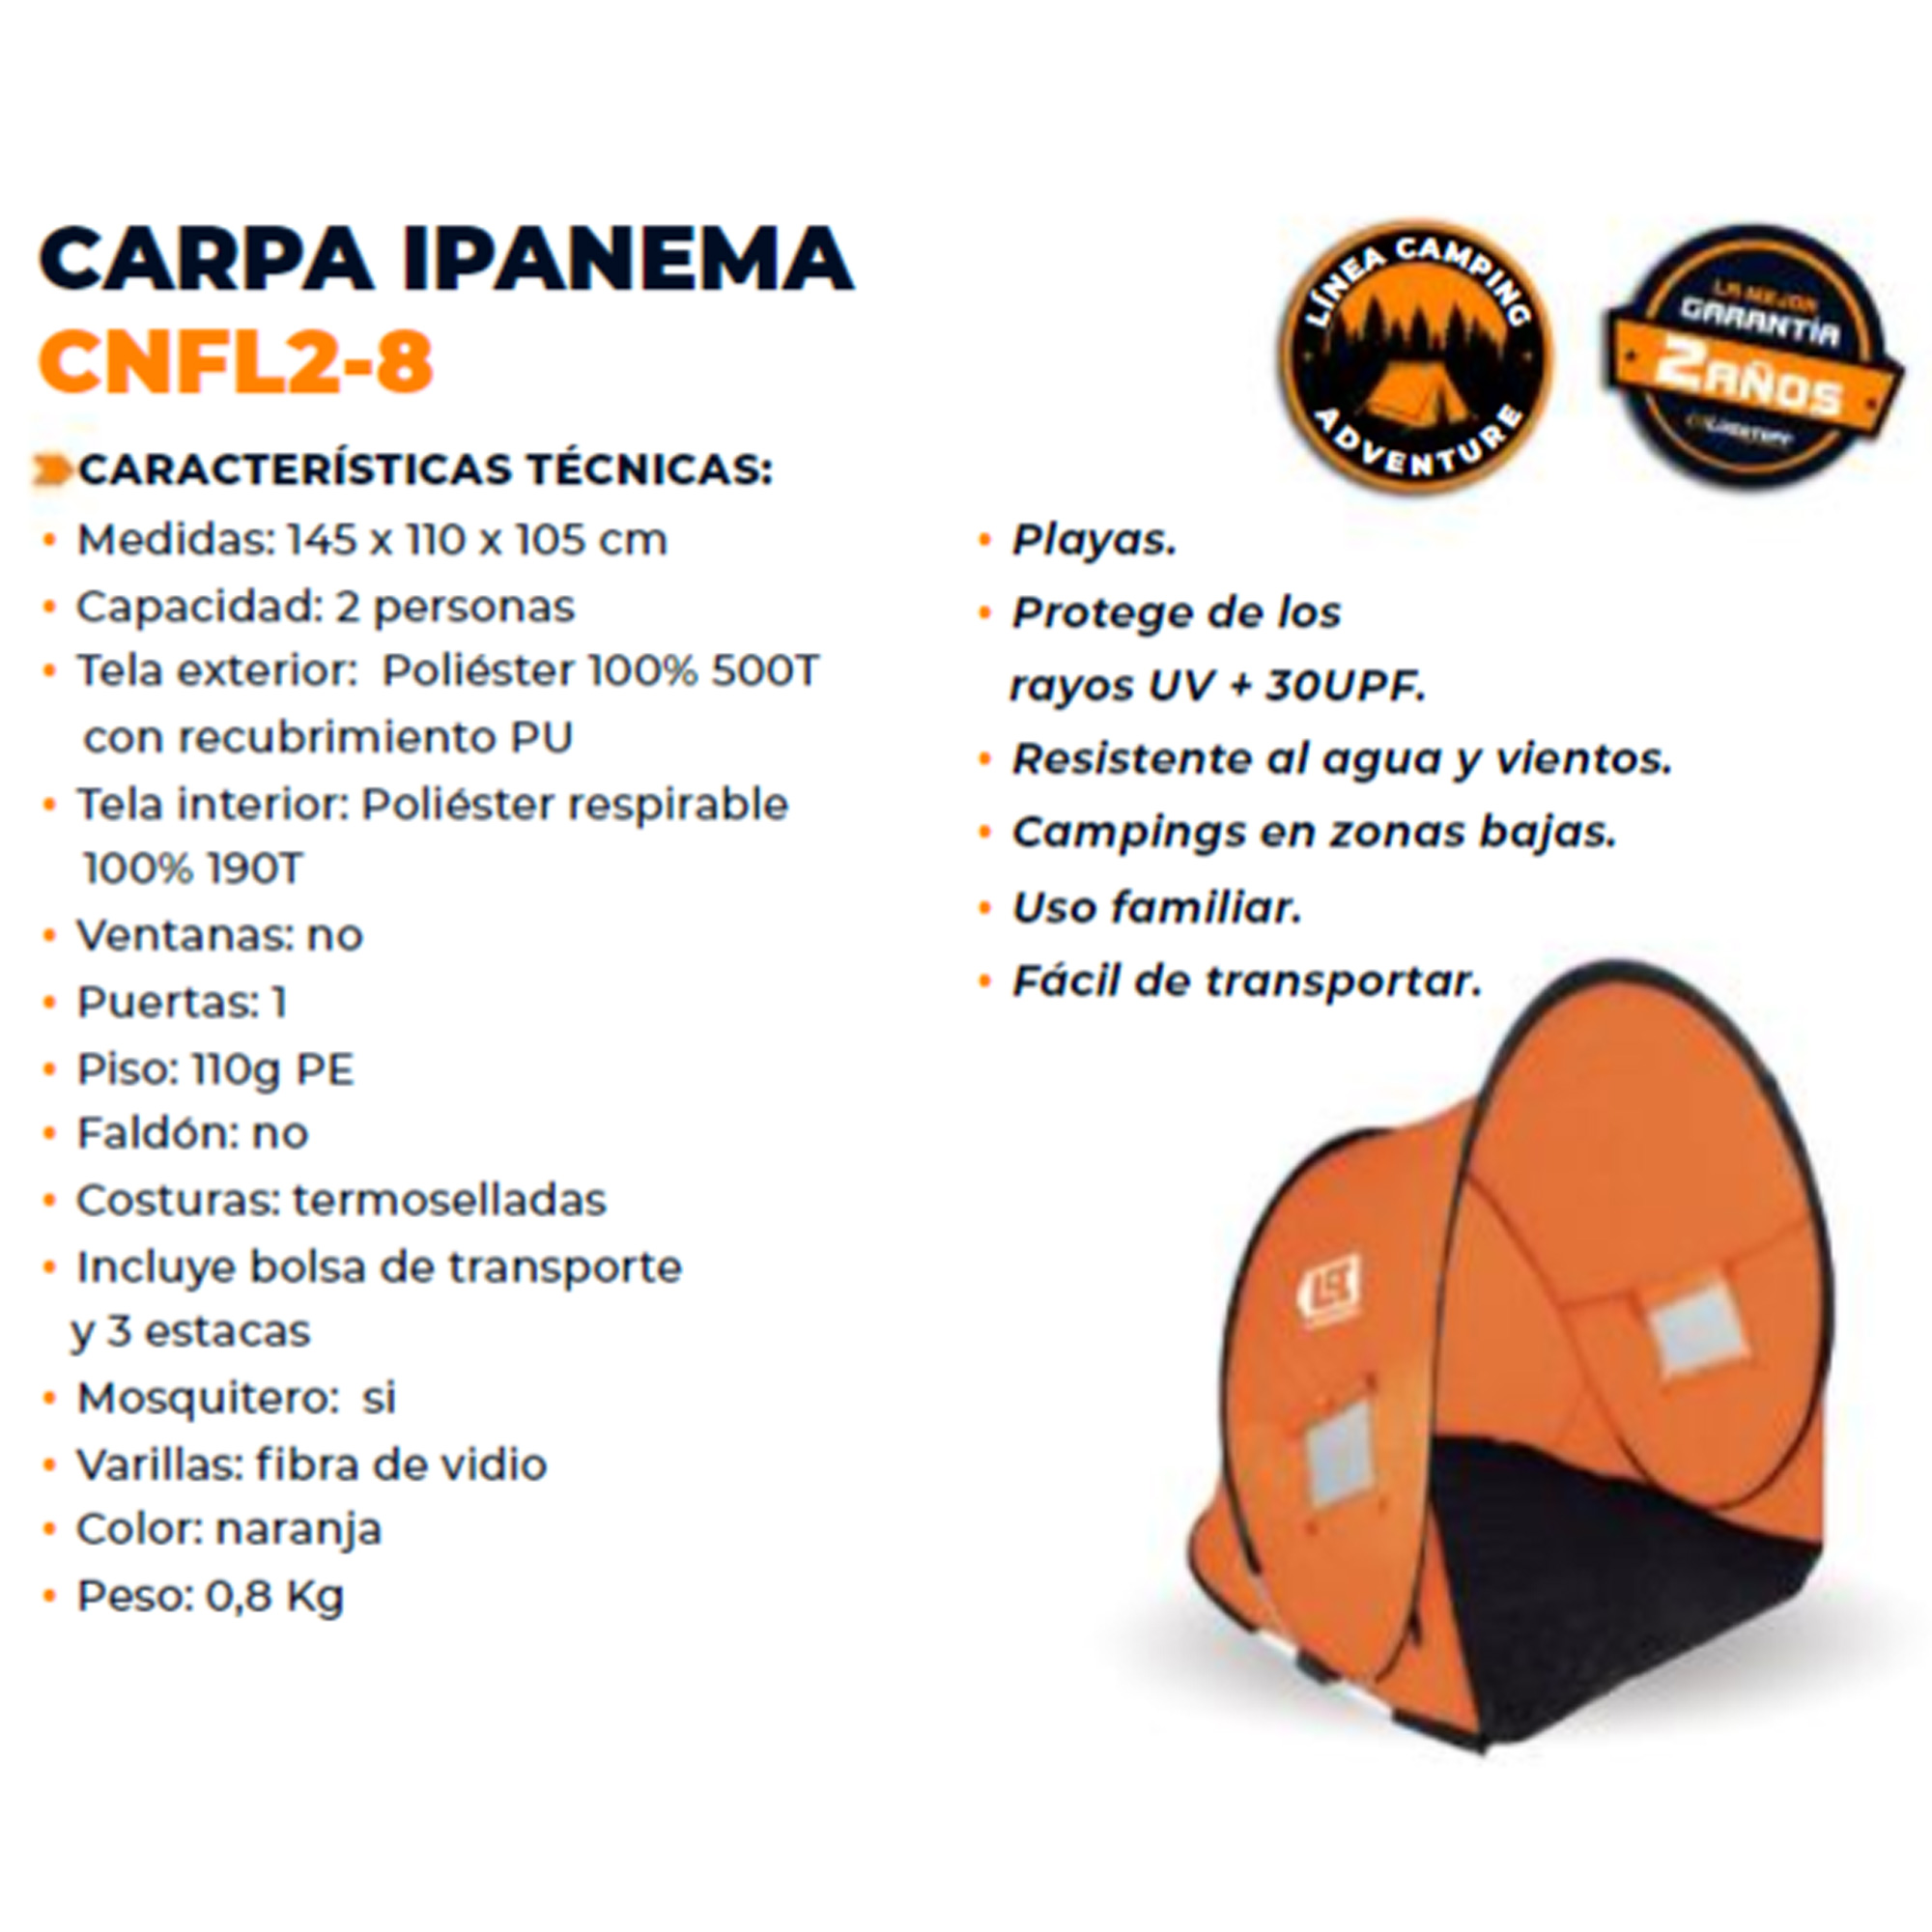 CNFL2-8 LUSQTOFF                                                     | CARPA IPANEMA LUSQTOFF CNFL2-8 PARA 2 PERSONAS                                                                                                                                                                                                            